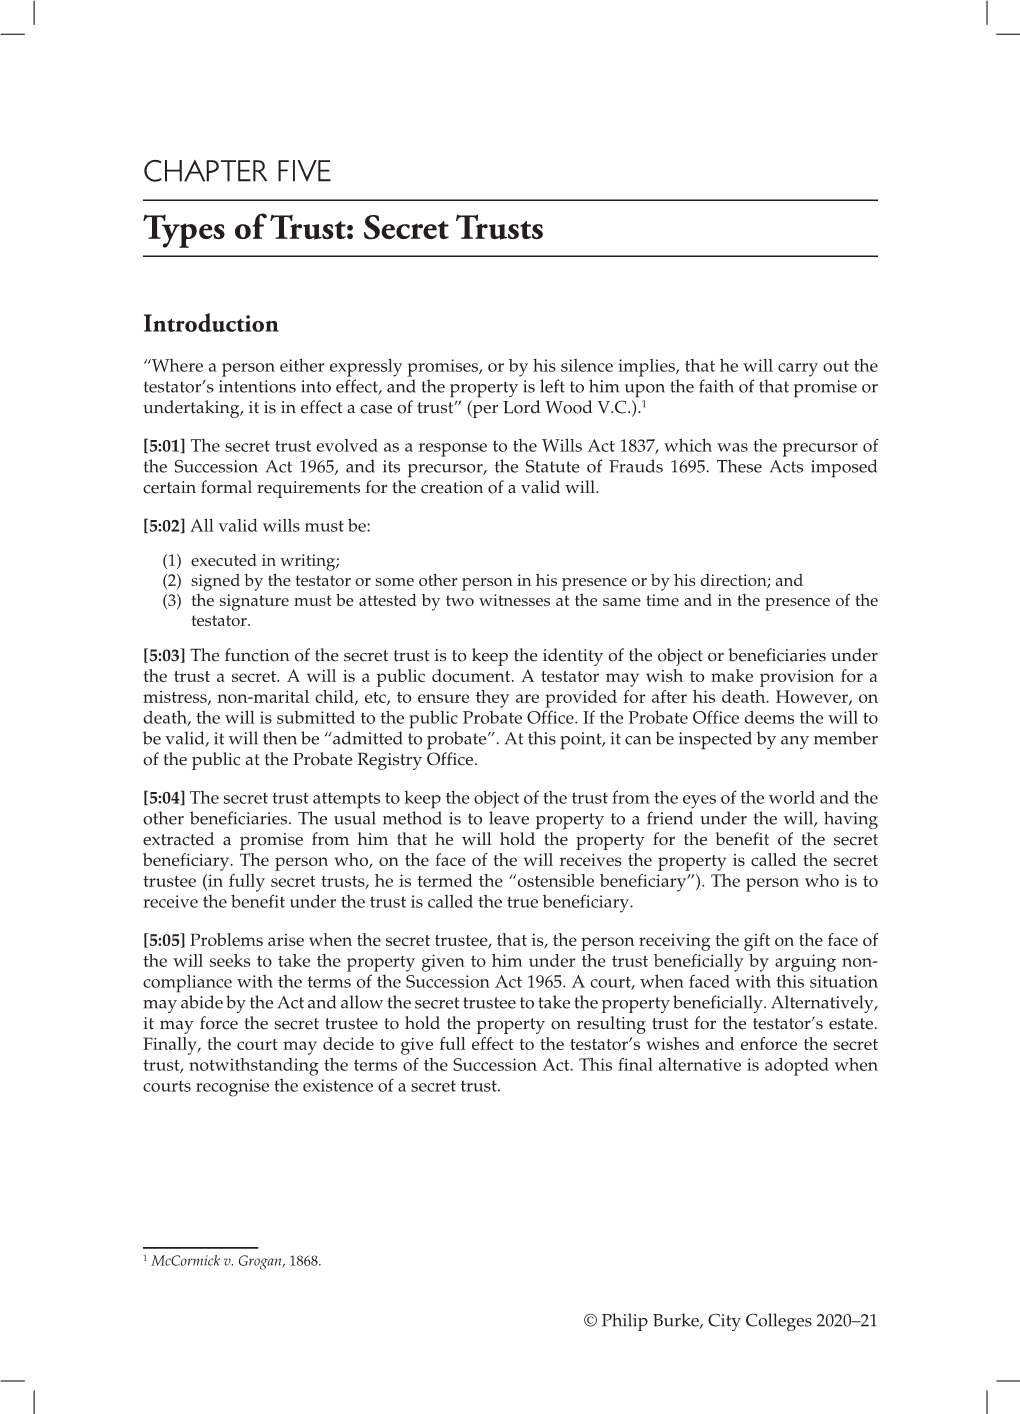 Types of Trust: Secret Trusts